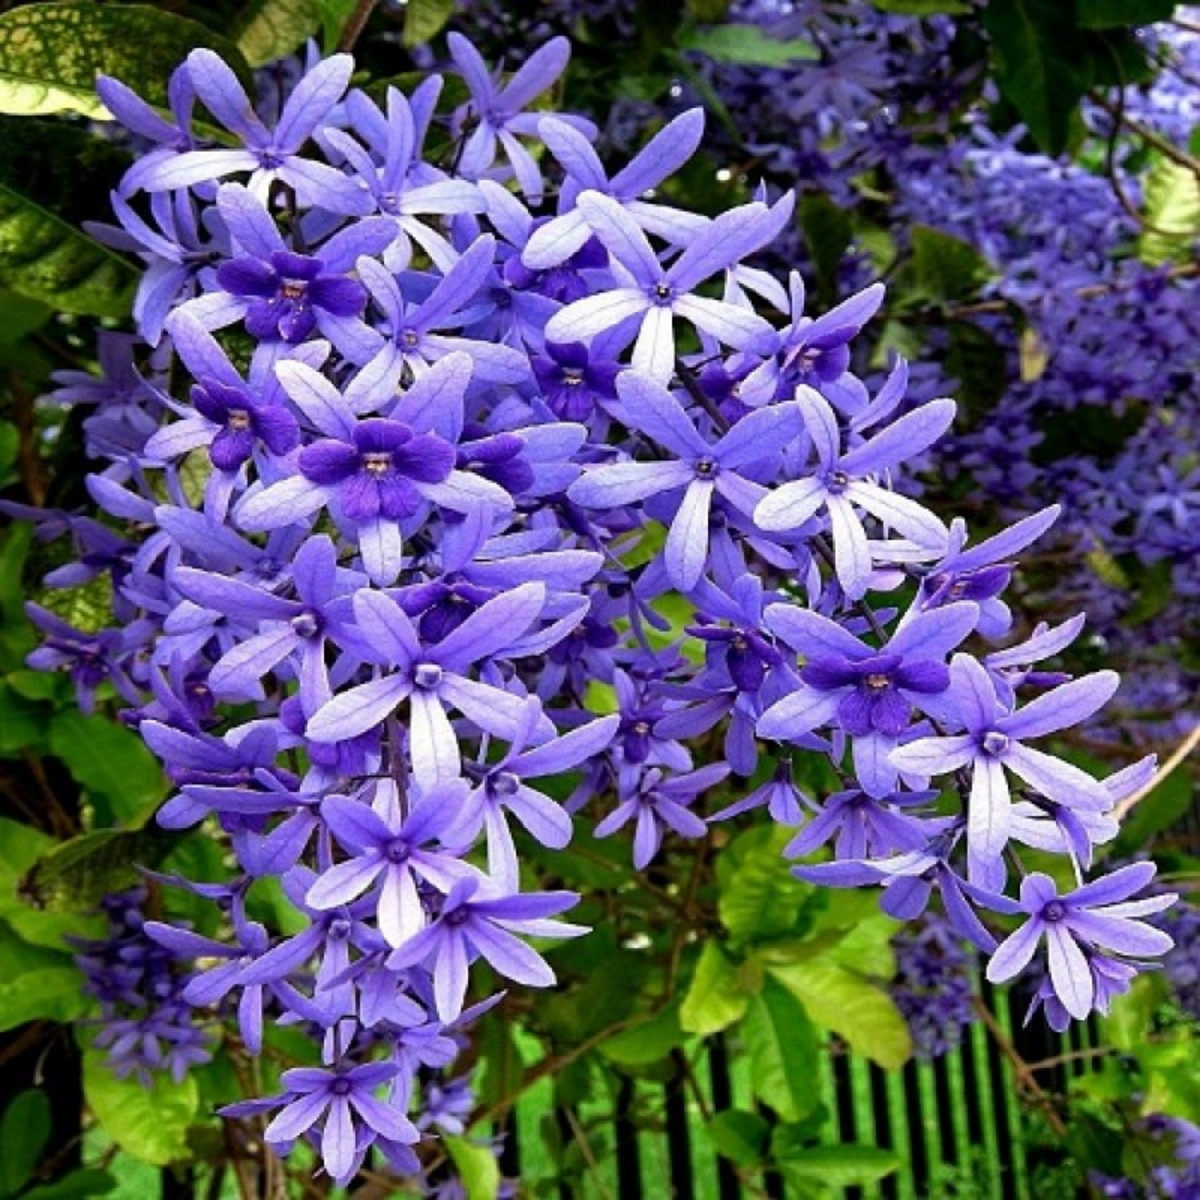 Sand paper Vine / Purple Wreath (Petrea Volubilis) Wine Creeper Flowering/Ornamental Live Plant (Home & Garden)